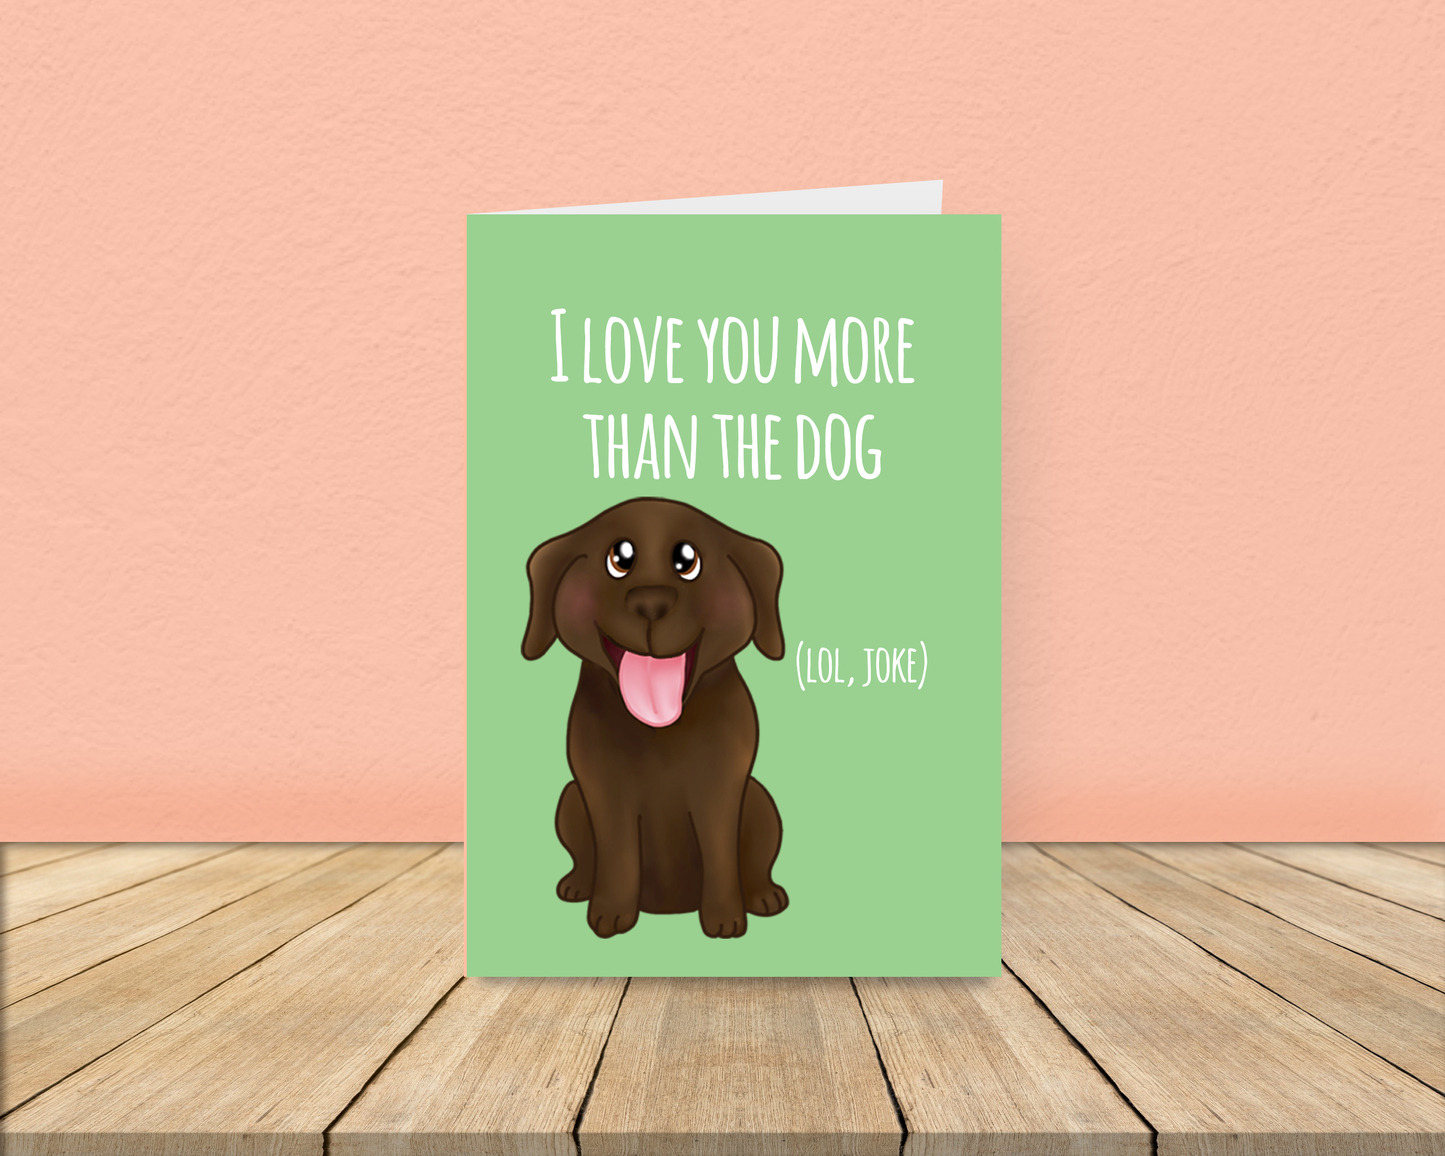 Love you more than the dog card - Chocolate Labrador